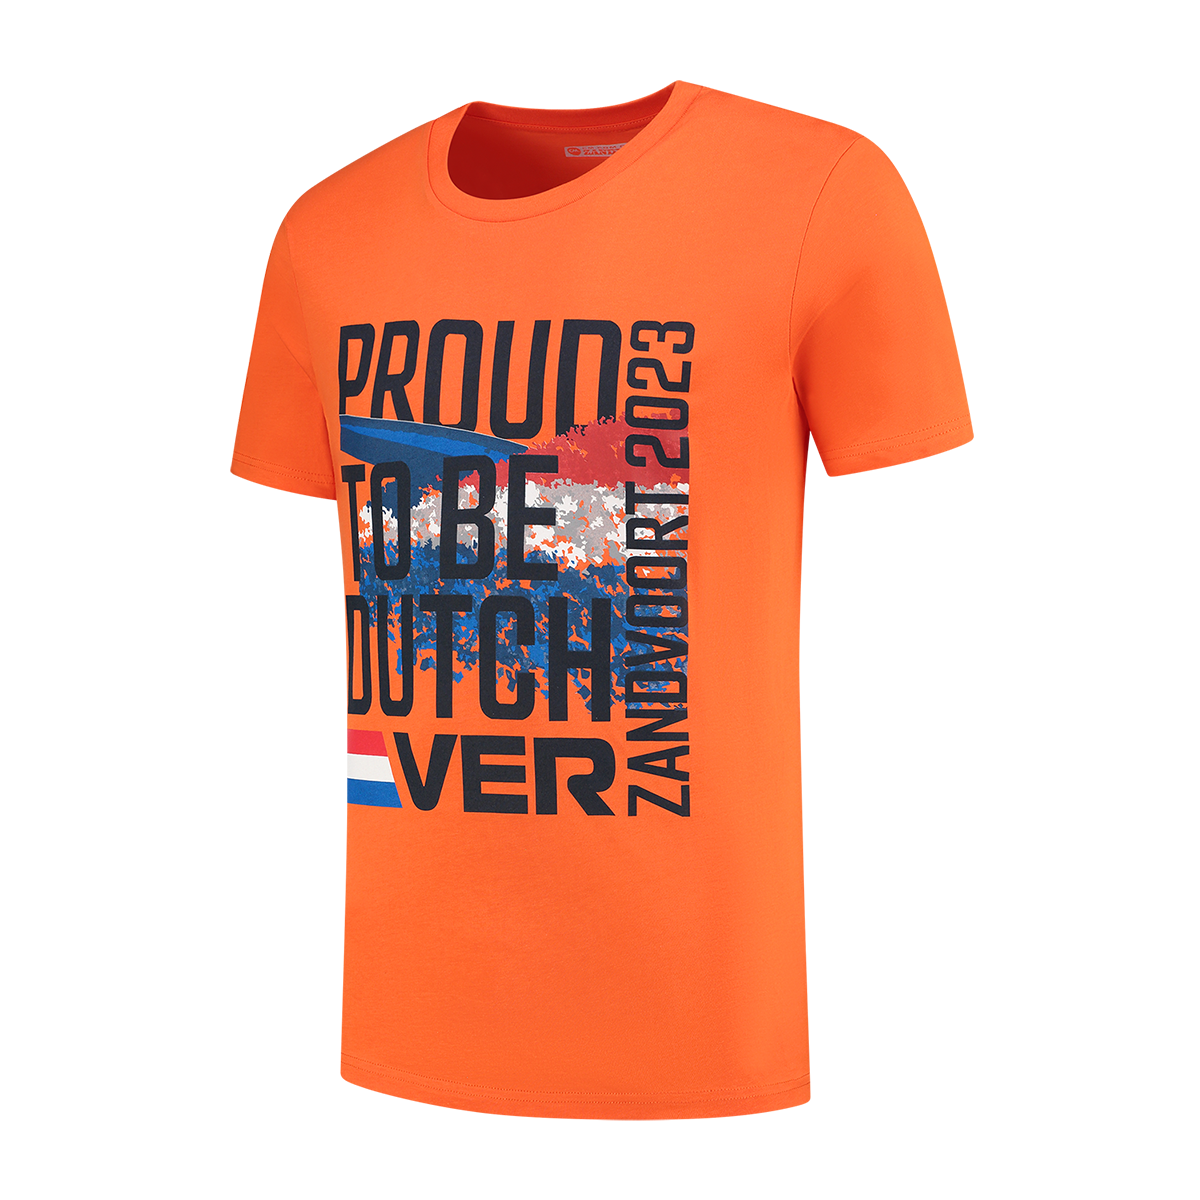 Proud to be Dutch - T-shirt Oranje - L - Max Verstappen